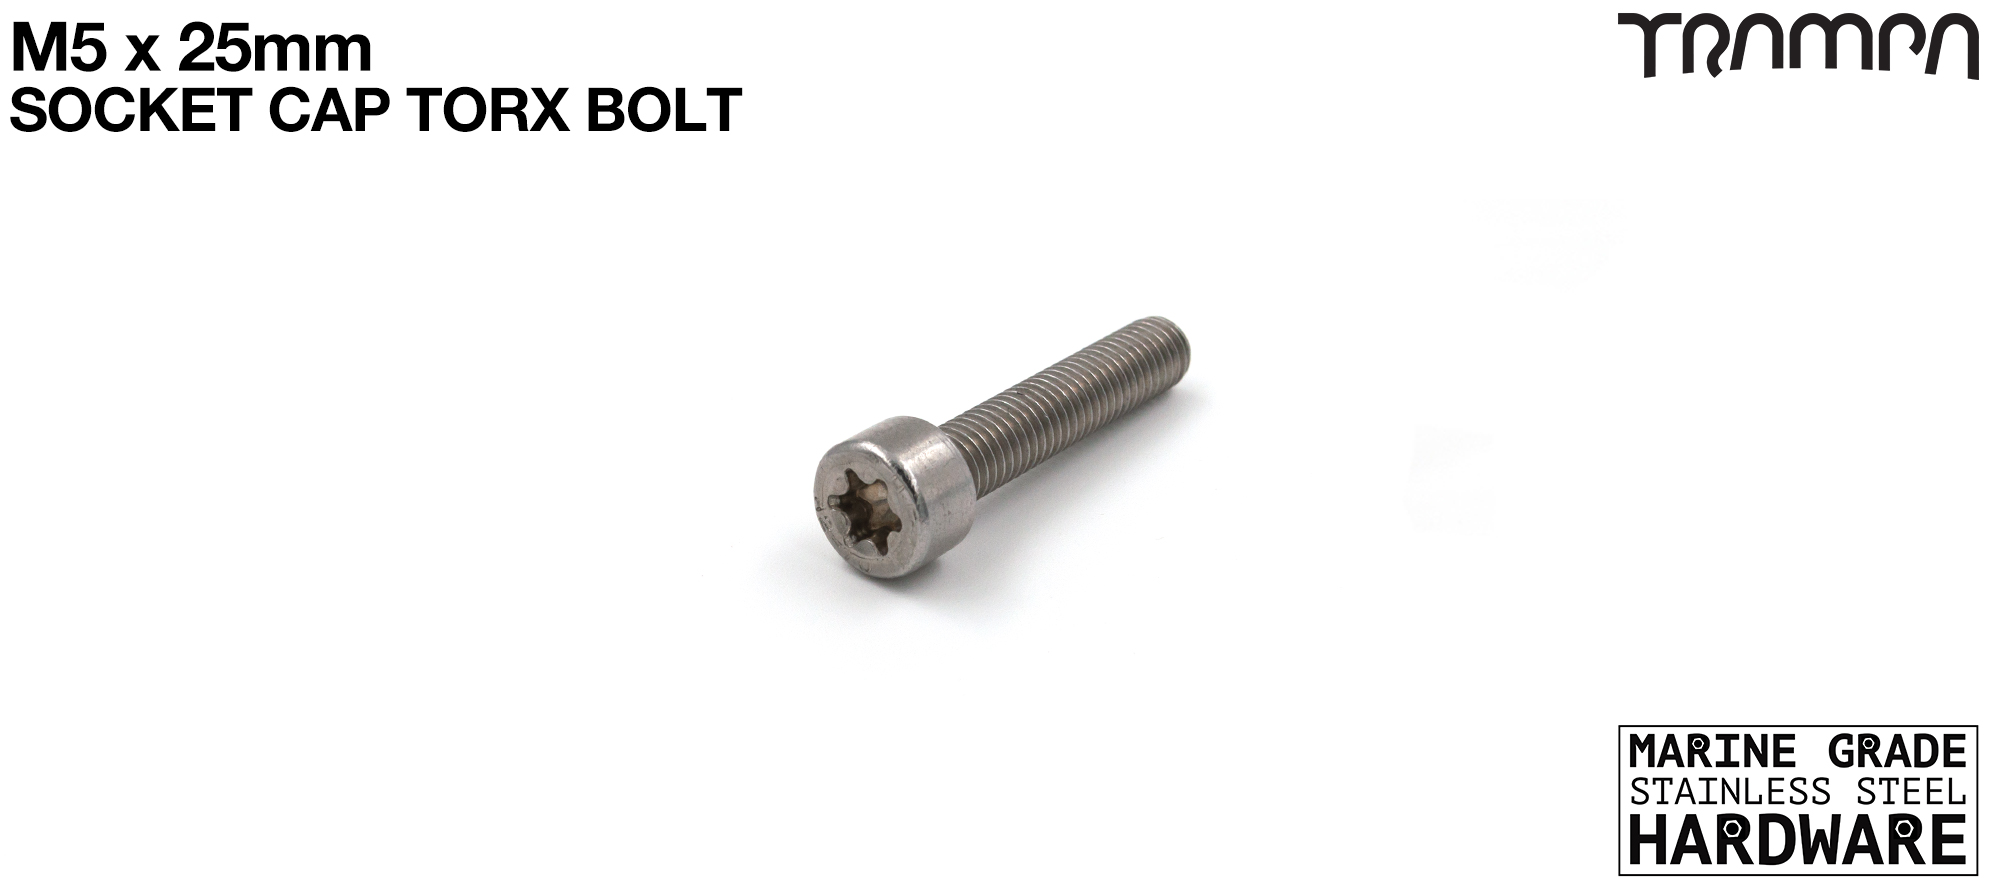 M5 x 25mm TORX Socket Capped TORX Head Bolt ISO 4762 Marine Grade Stainless Steel 